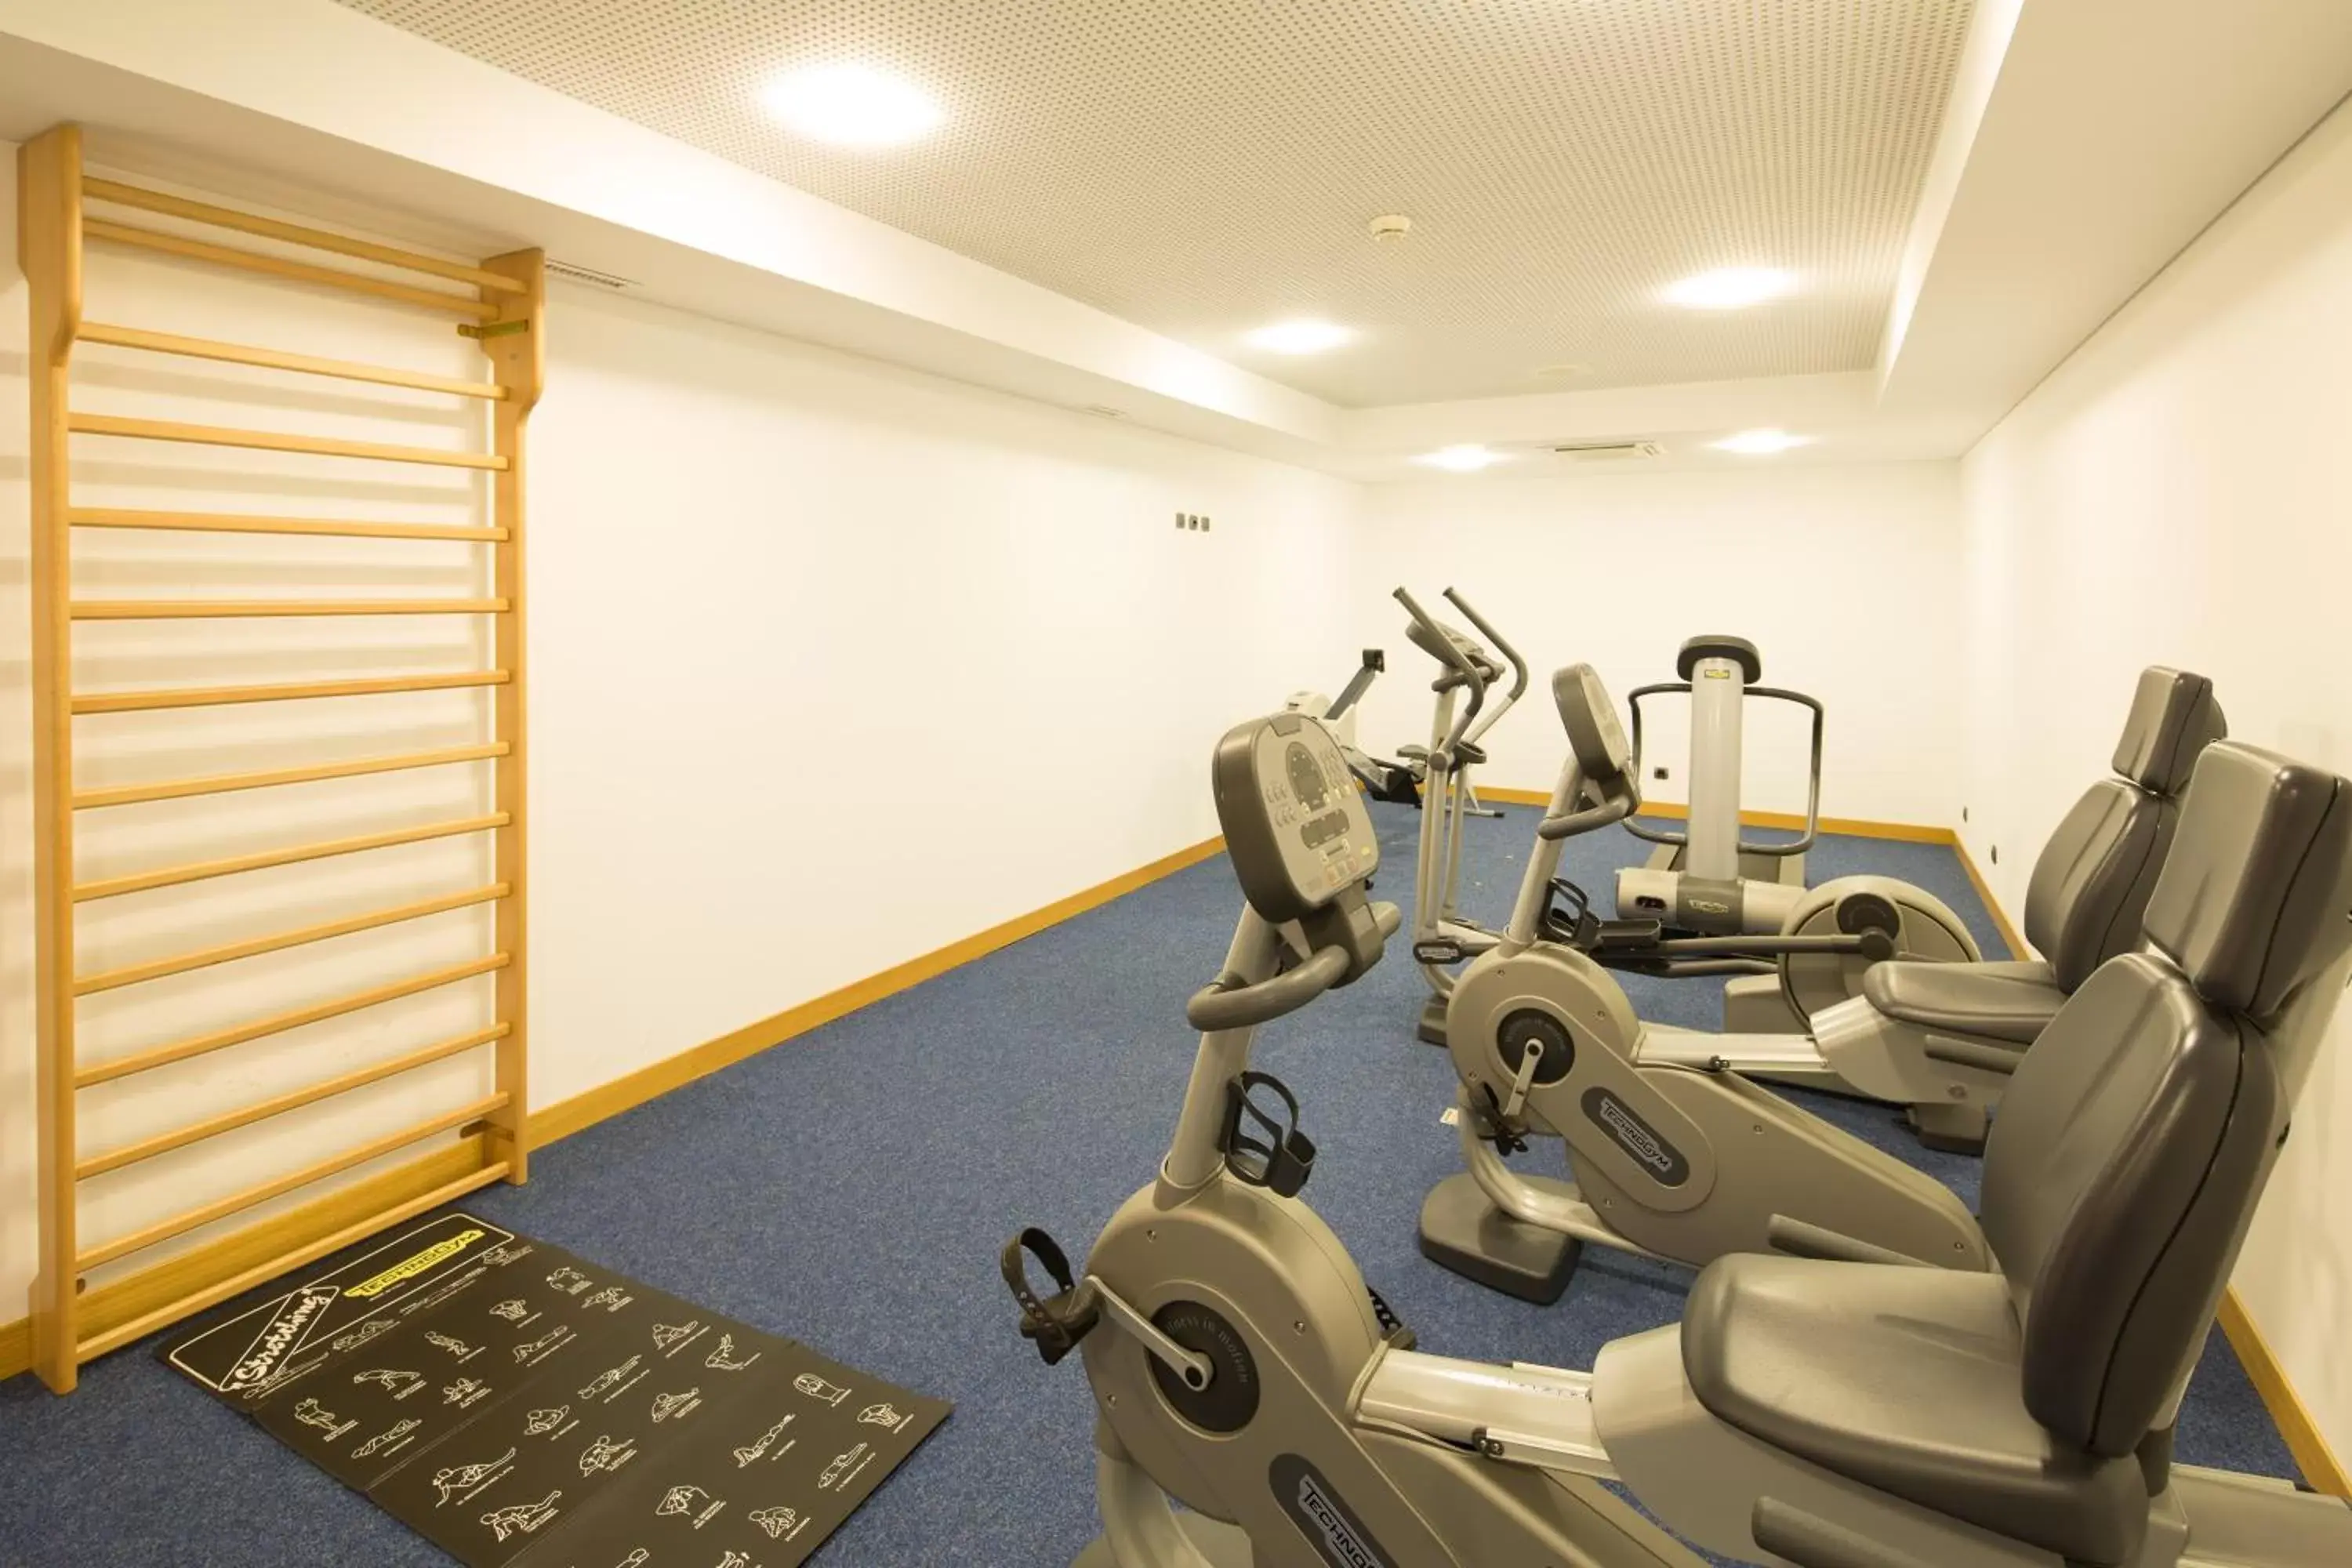 Fitness centre/facilities, Fitness Center/Facilities in Hotel Coronado